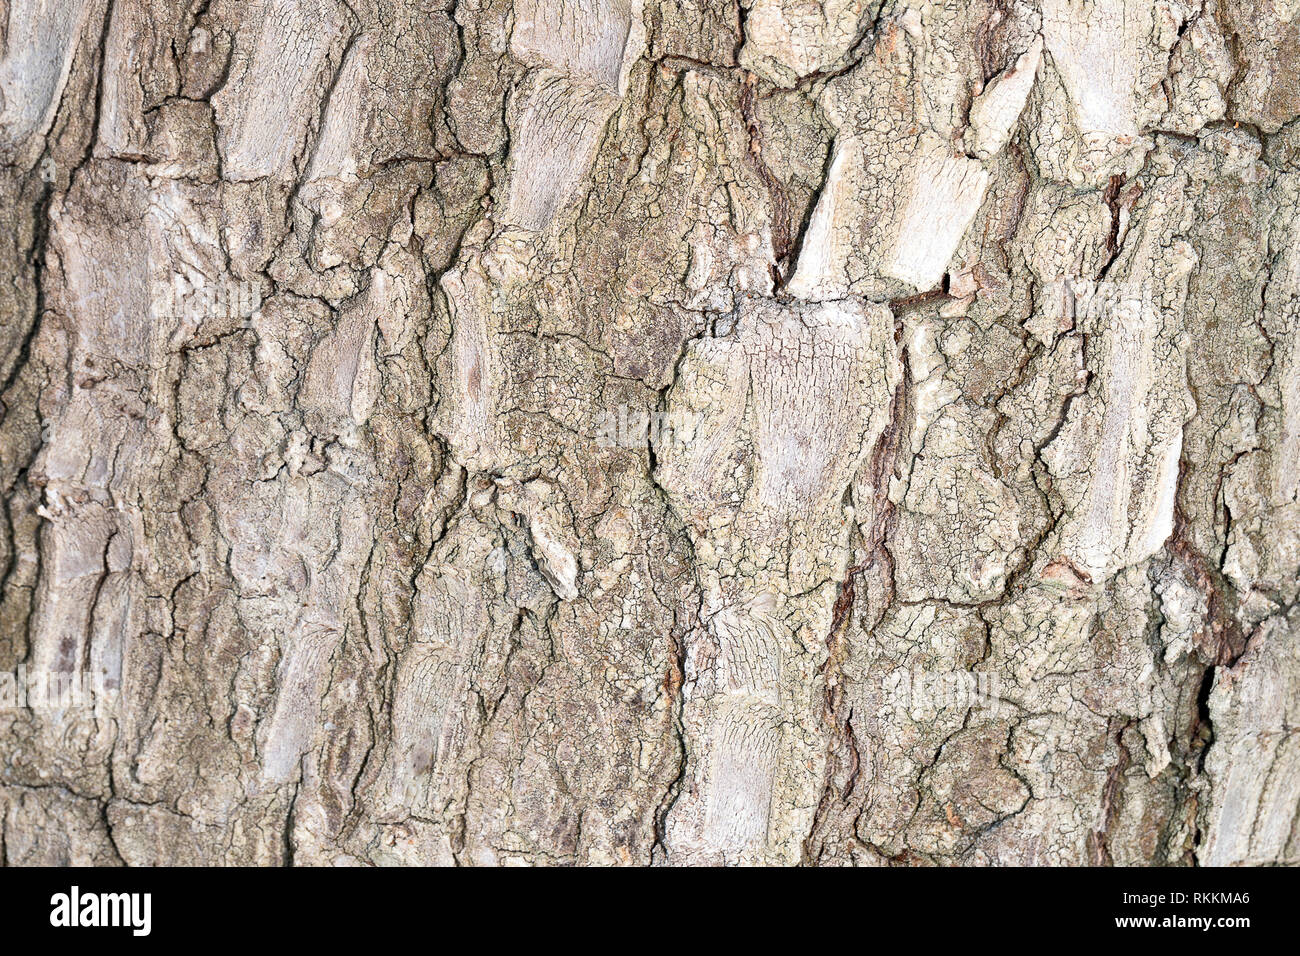 Tree bark texture, background image Stock Photo